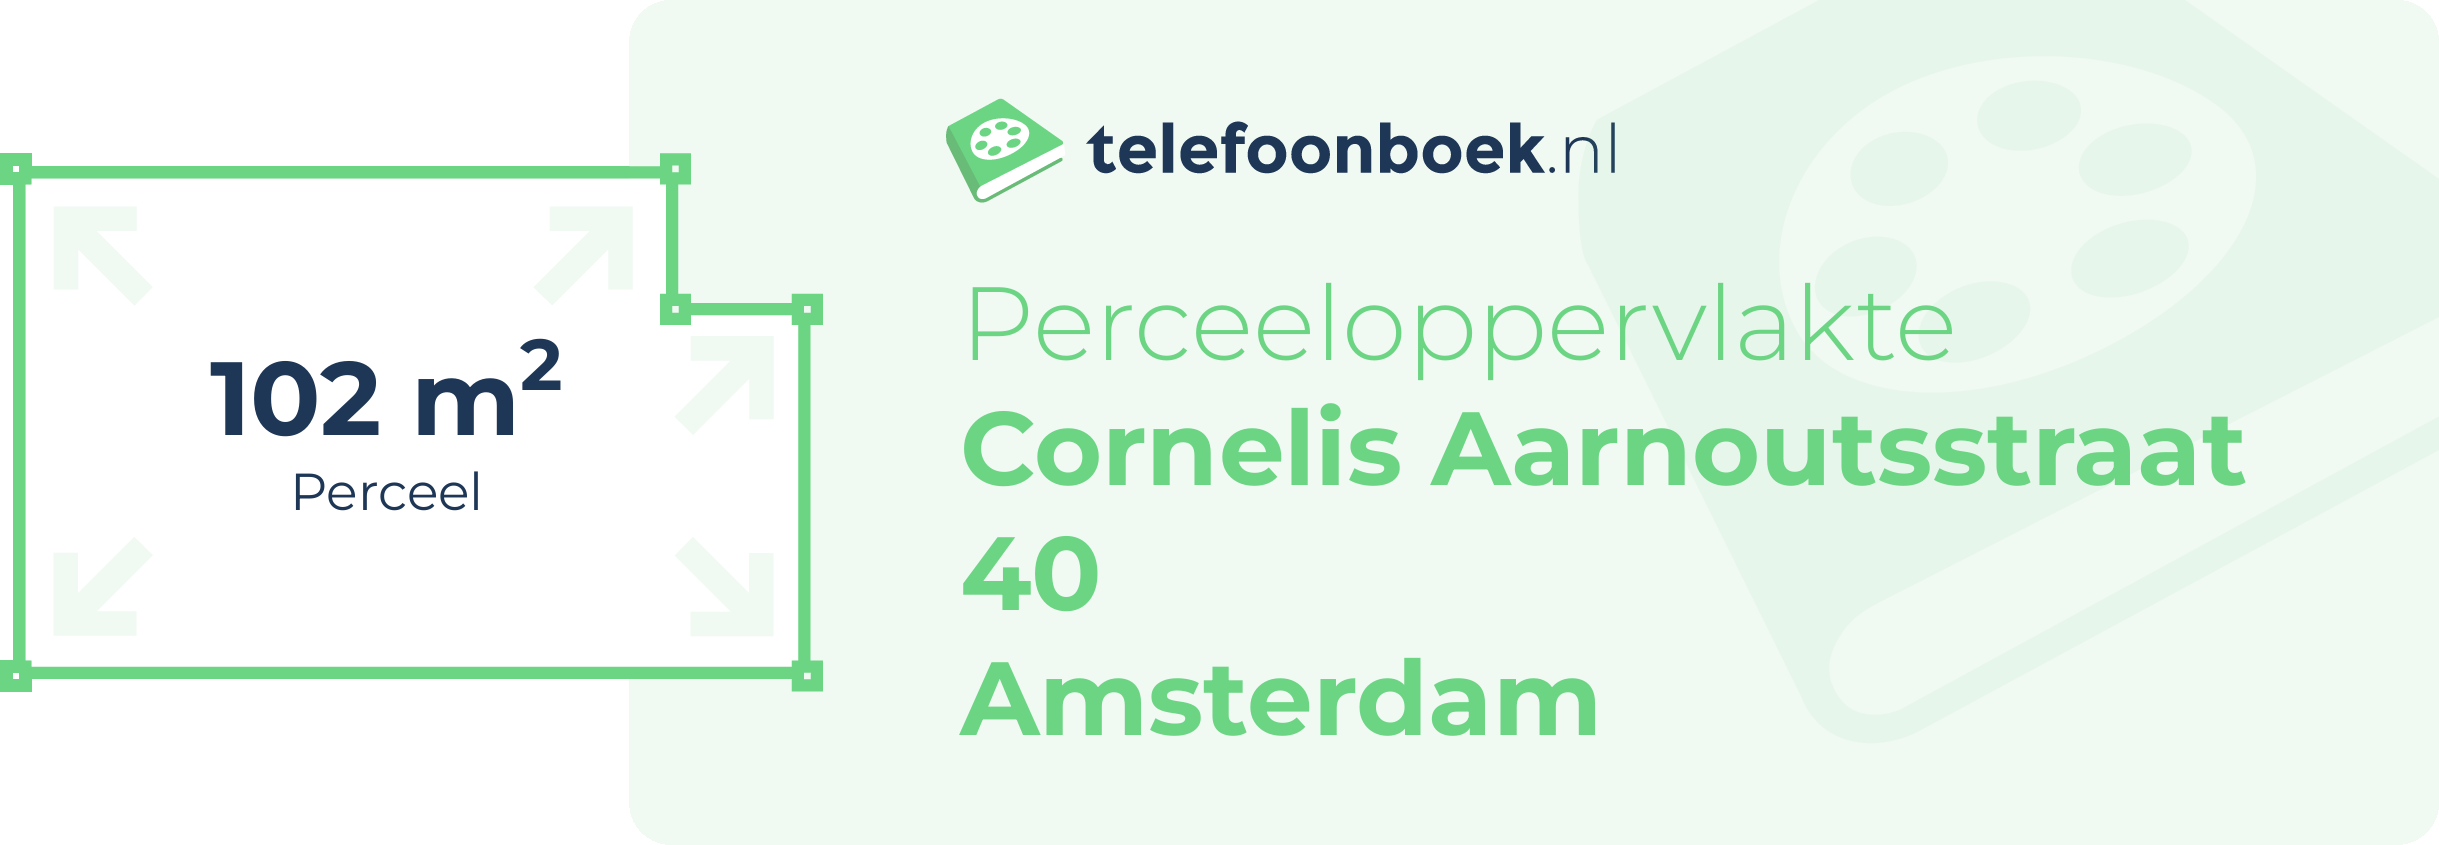 Perceeloppervlakte Cornelis Aarnoutsstraat 40 Amsterdam